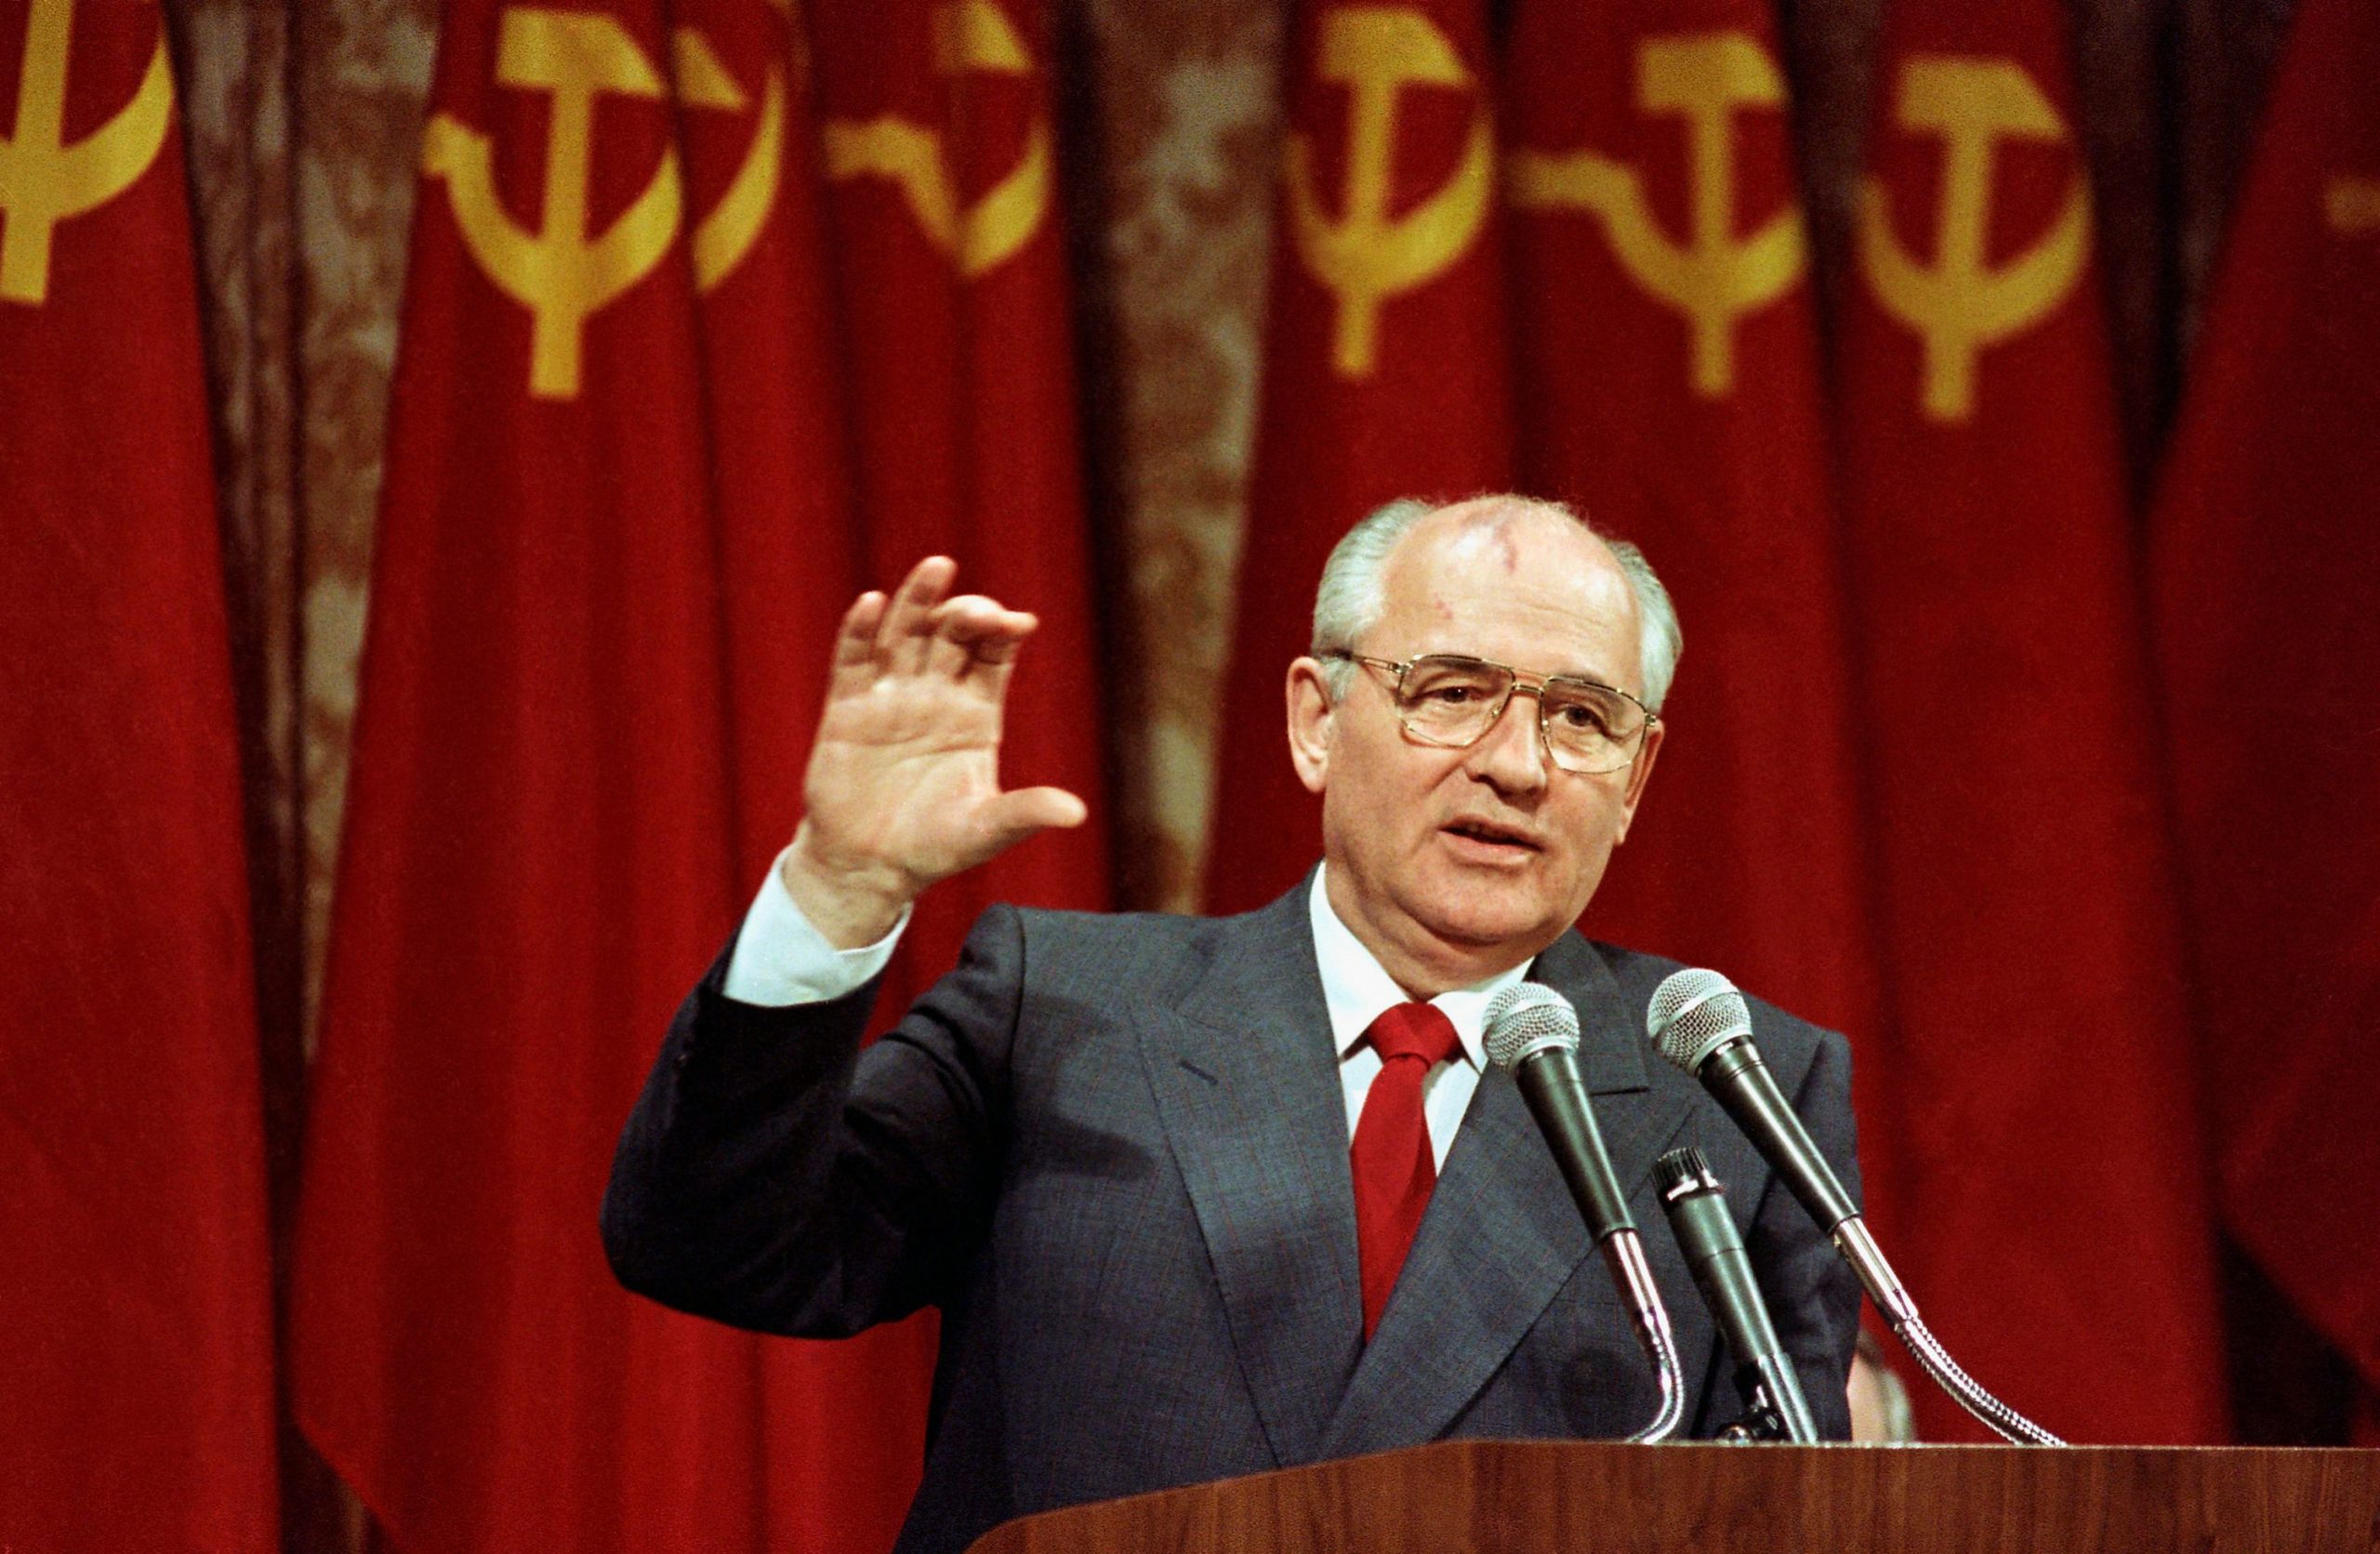 Mikhail Gorbachev family: Know about his wife Raisa and daughter Irina Virganskaya